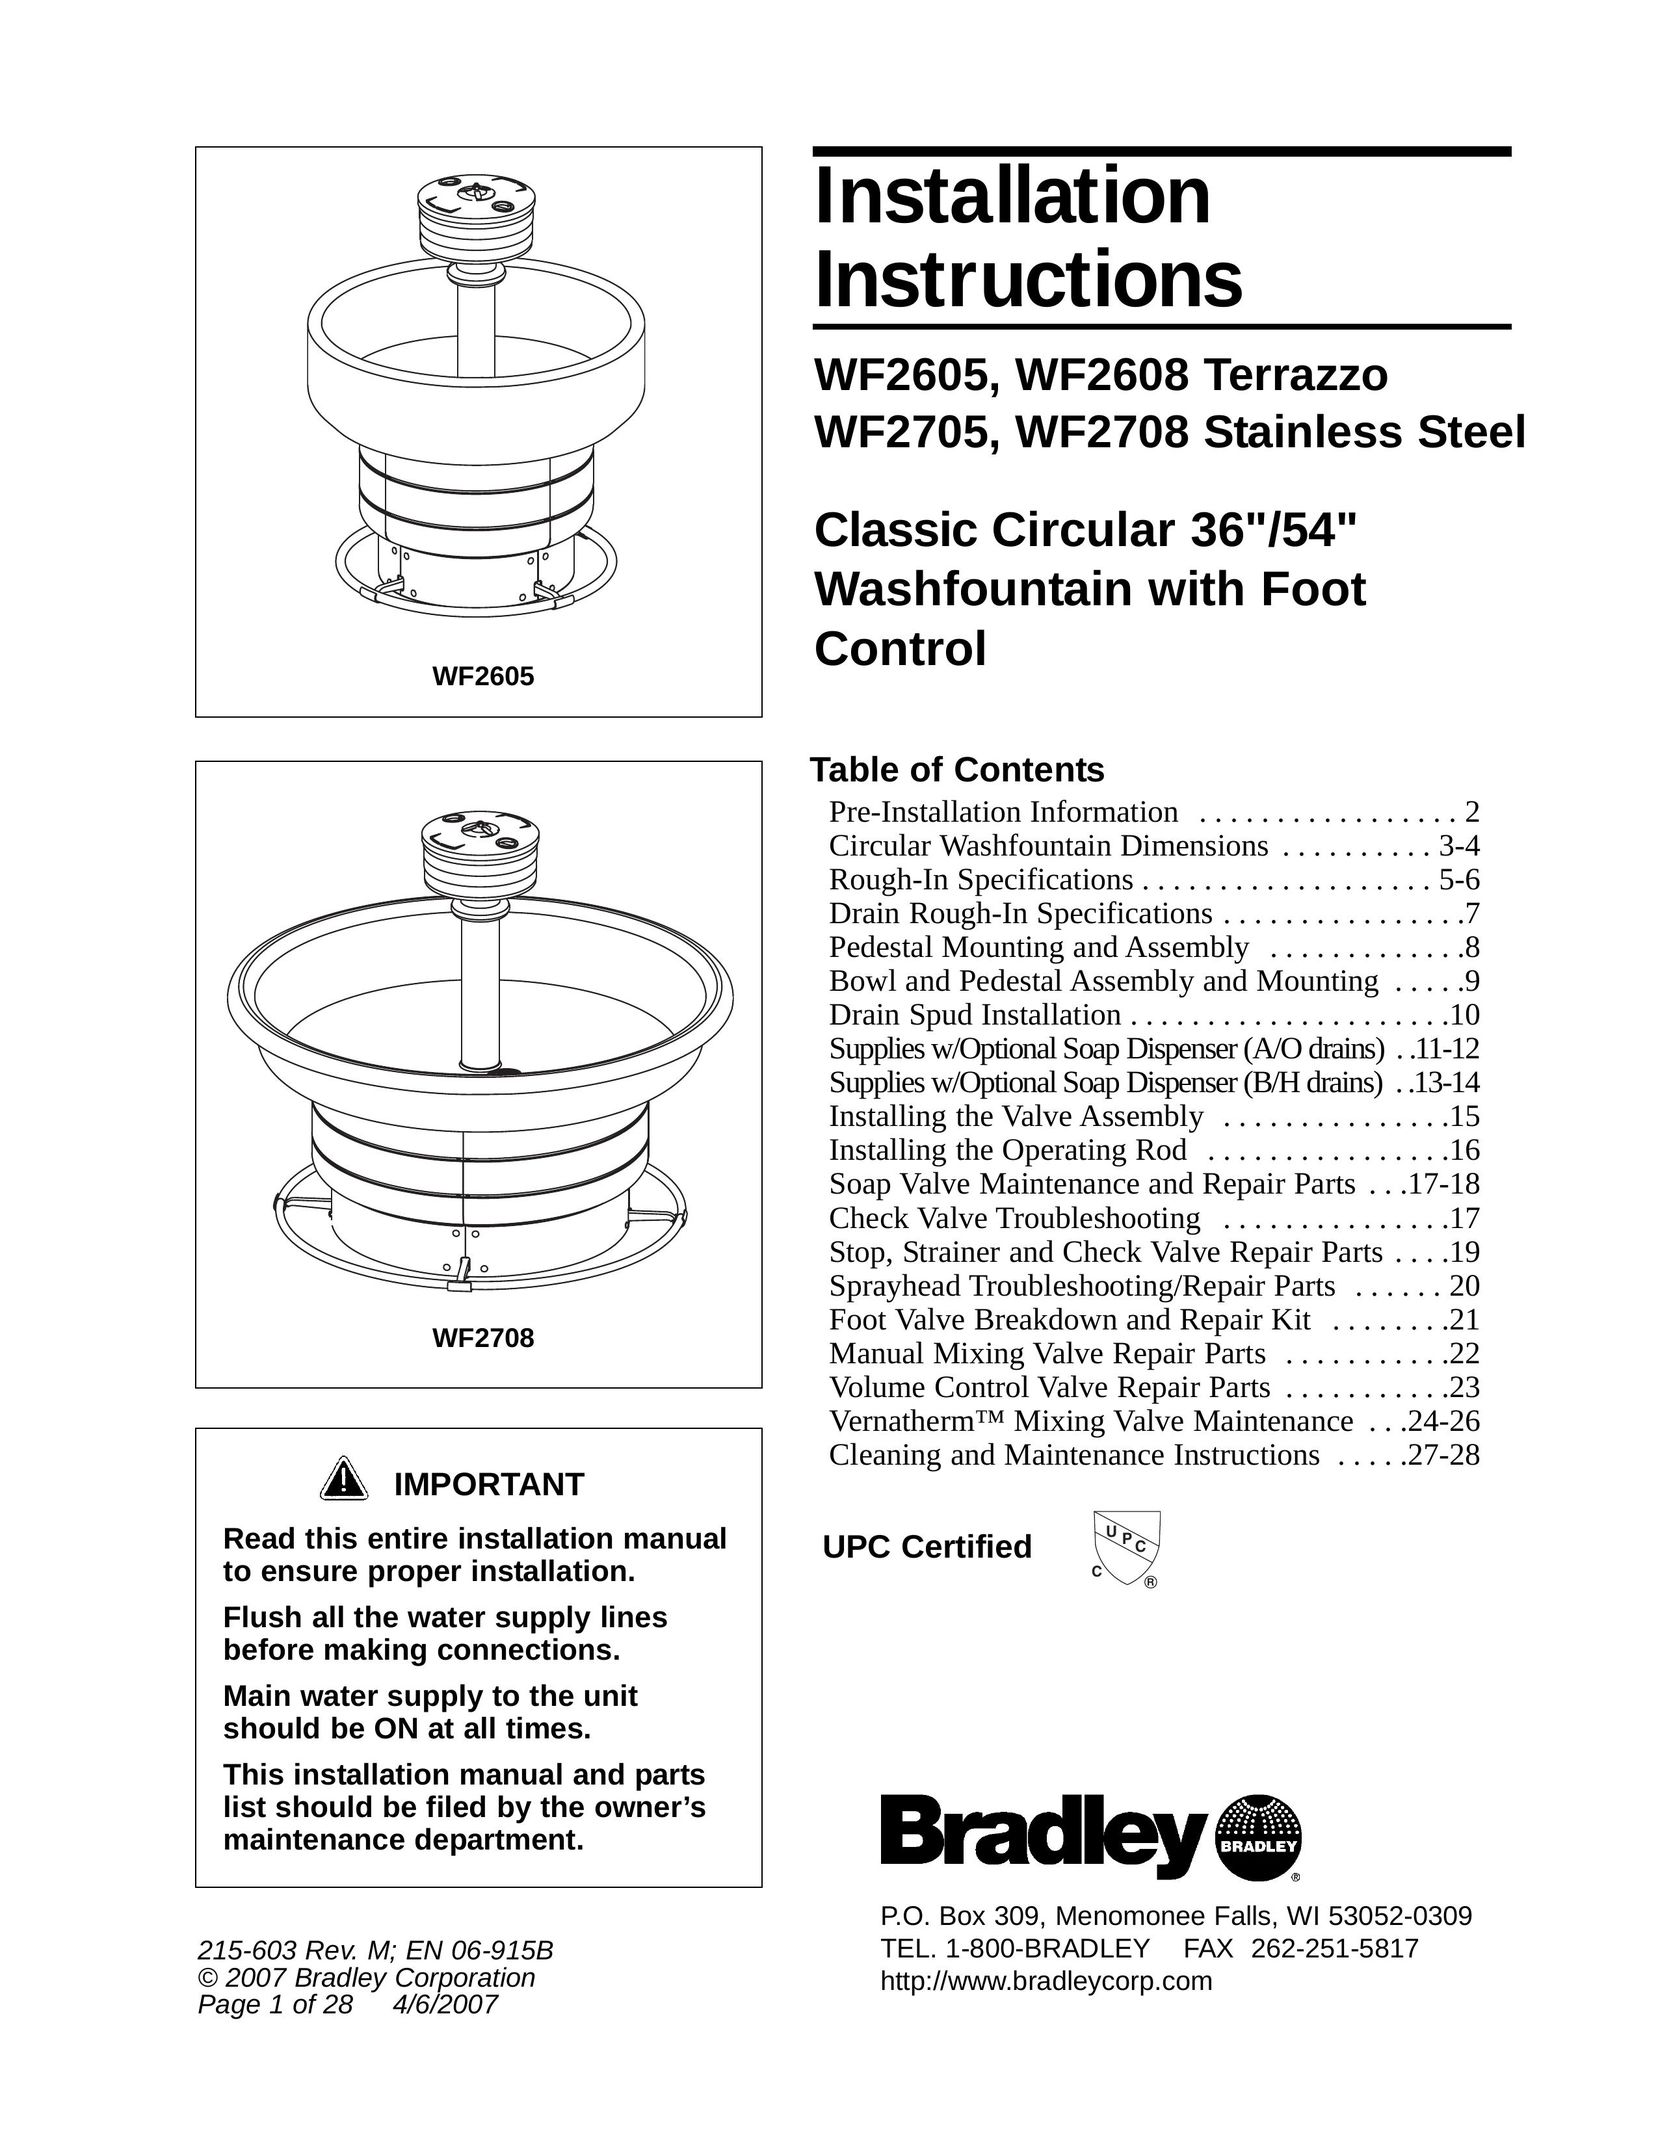 Bradley Smoker WF2605 Plumbing Product User Manual